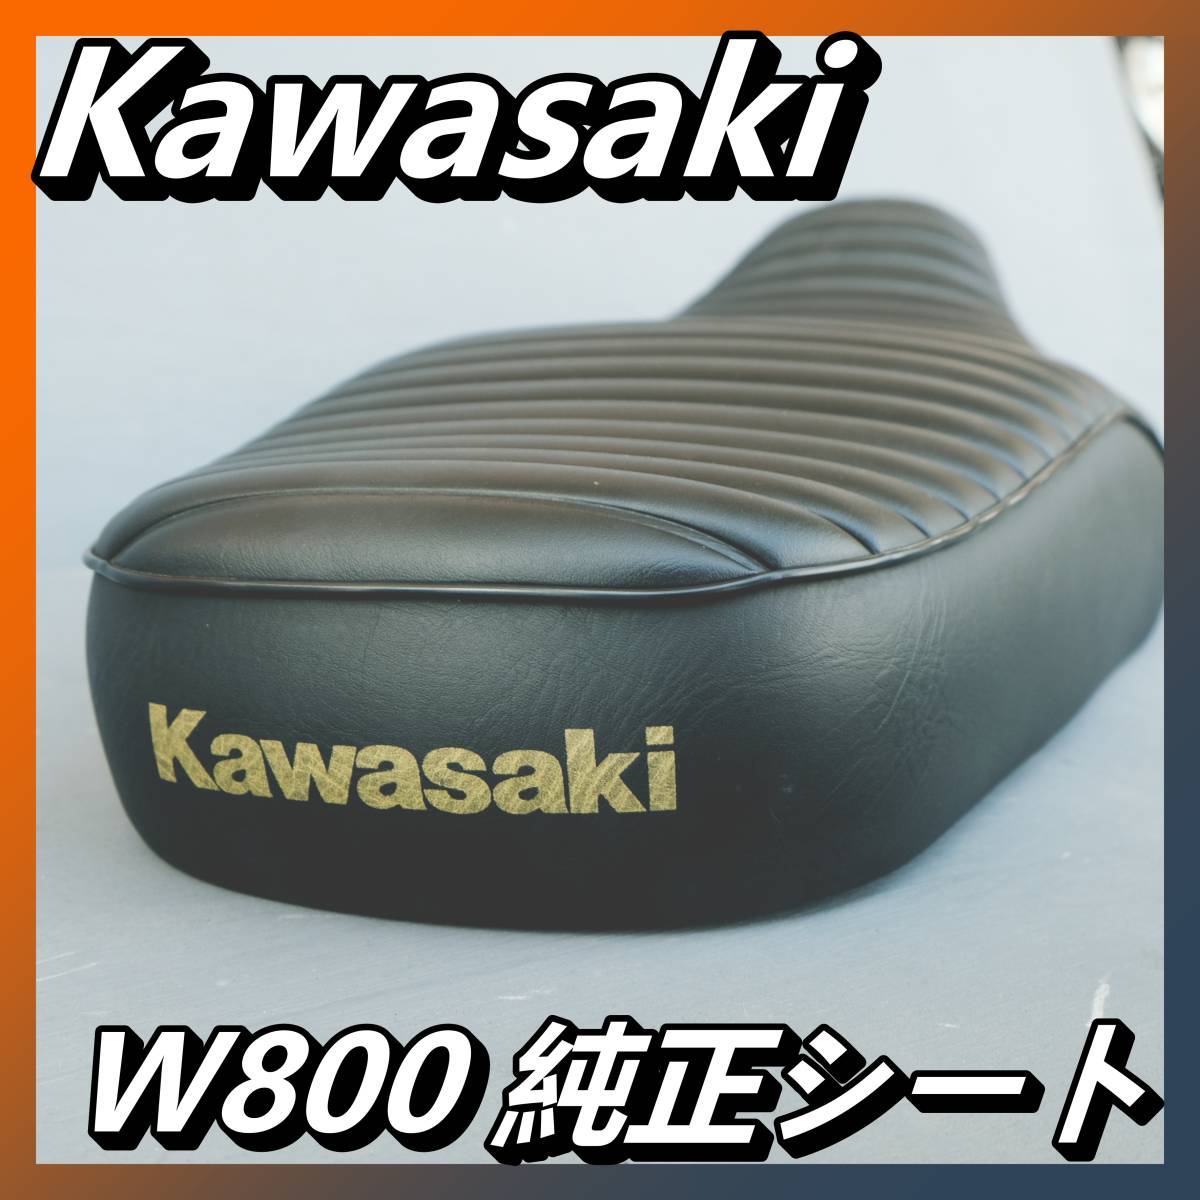 kawasaki W800 純正シート ゴールドロゴ入り カワサキ W650 シート 